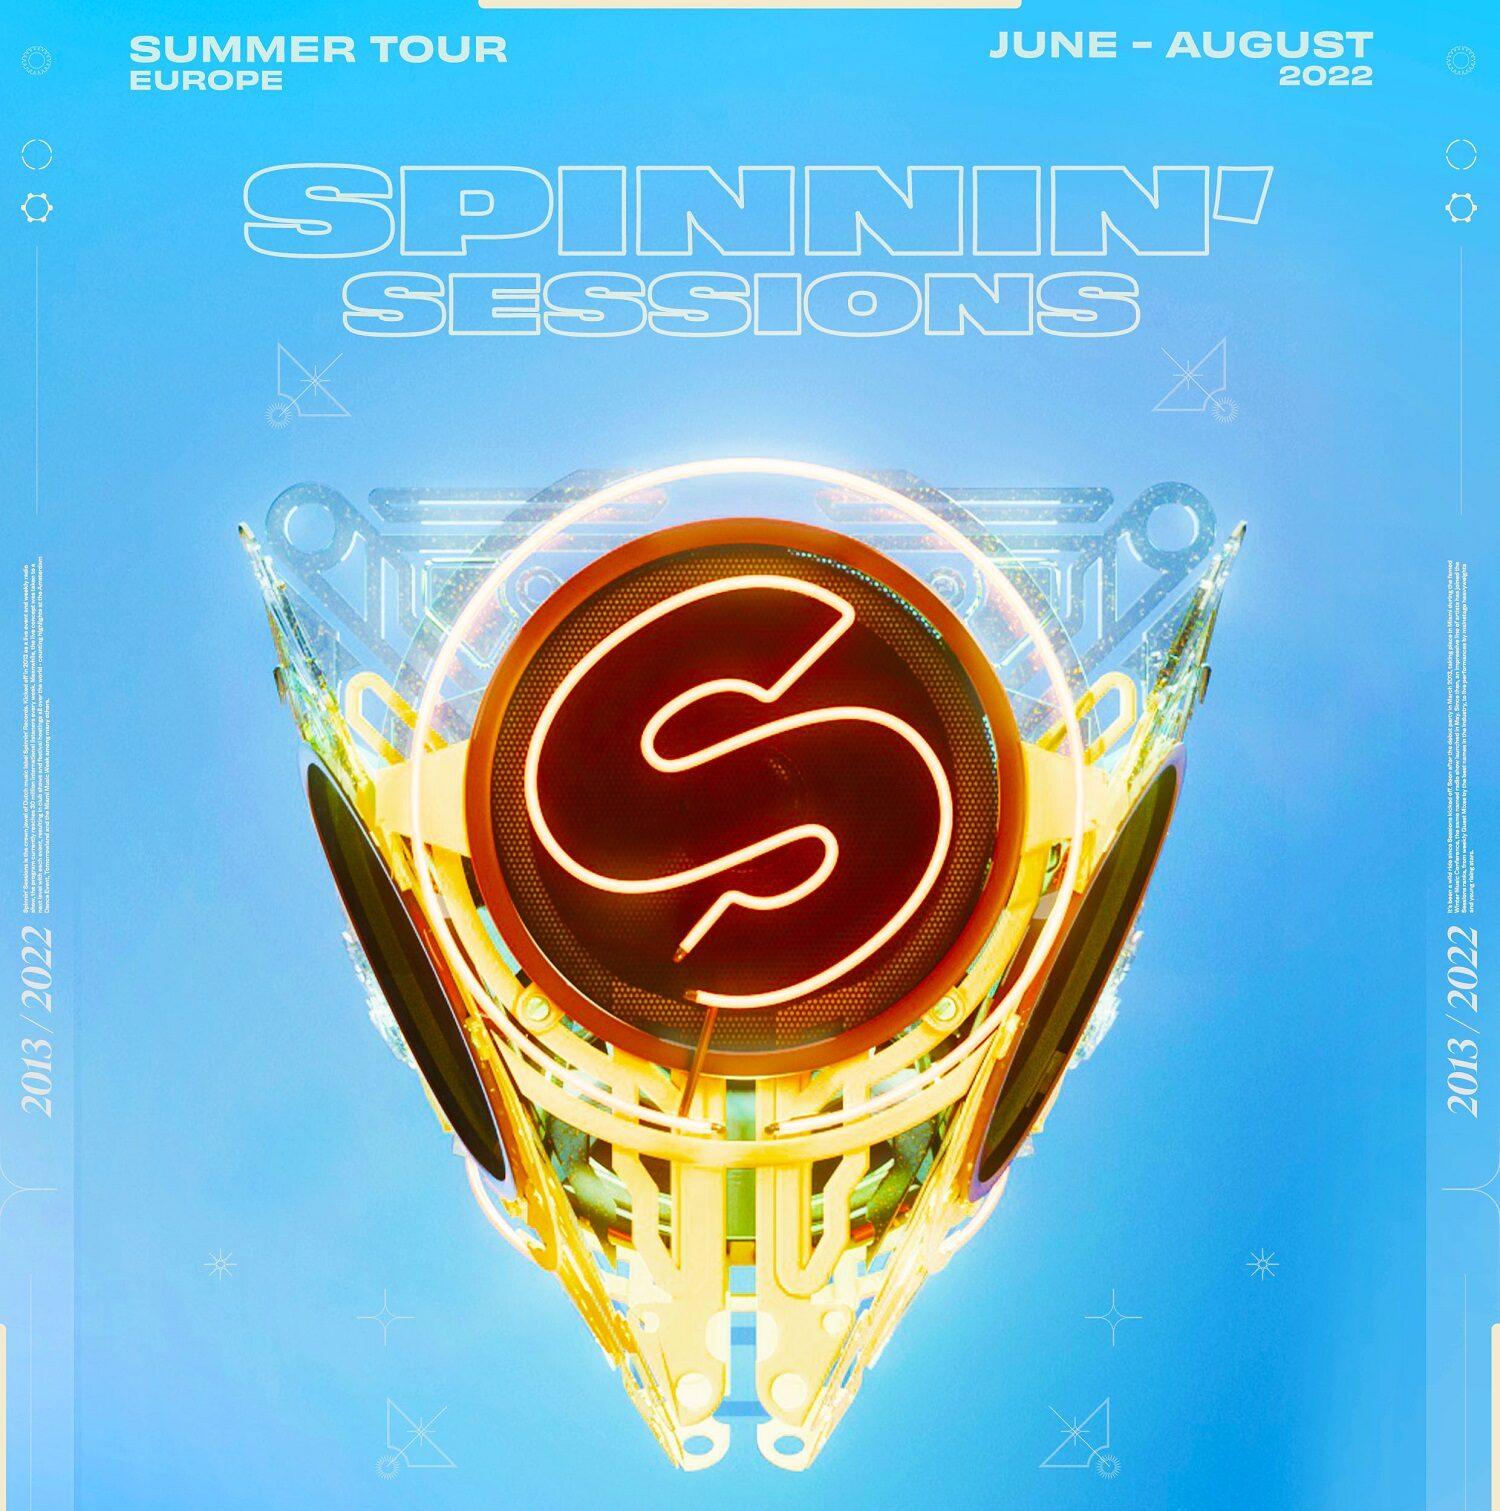 Spinnin’ Sessions Announces 25 Stop European Summer Tour!